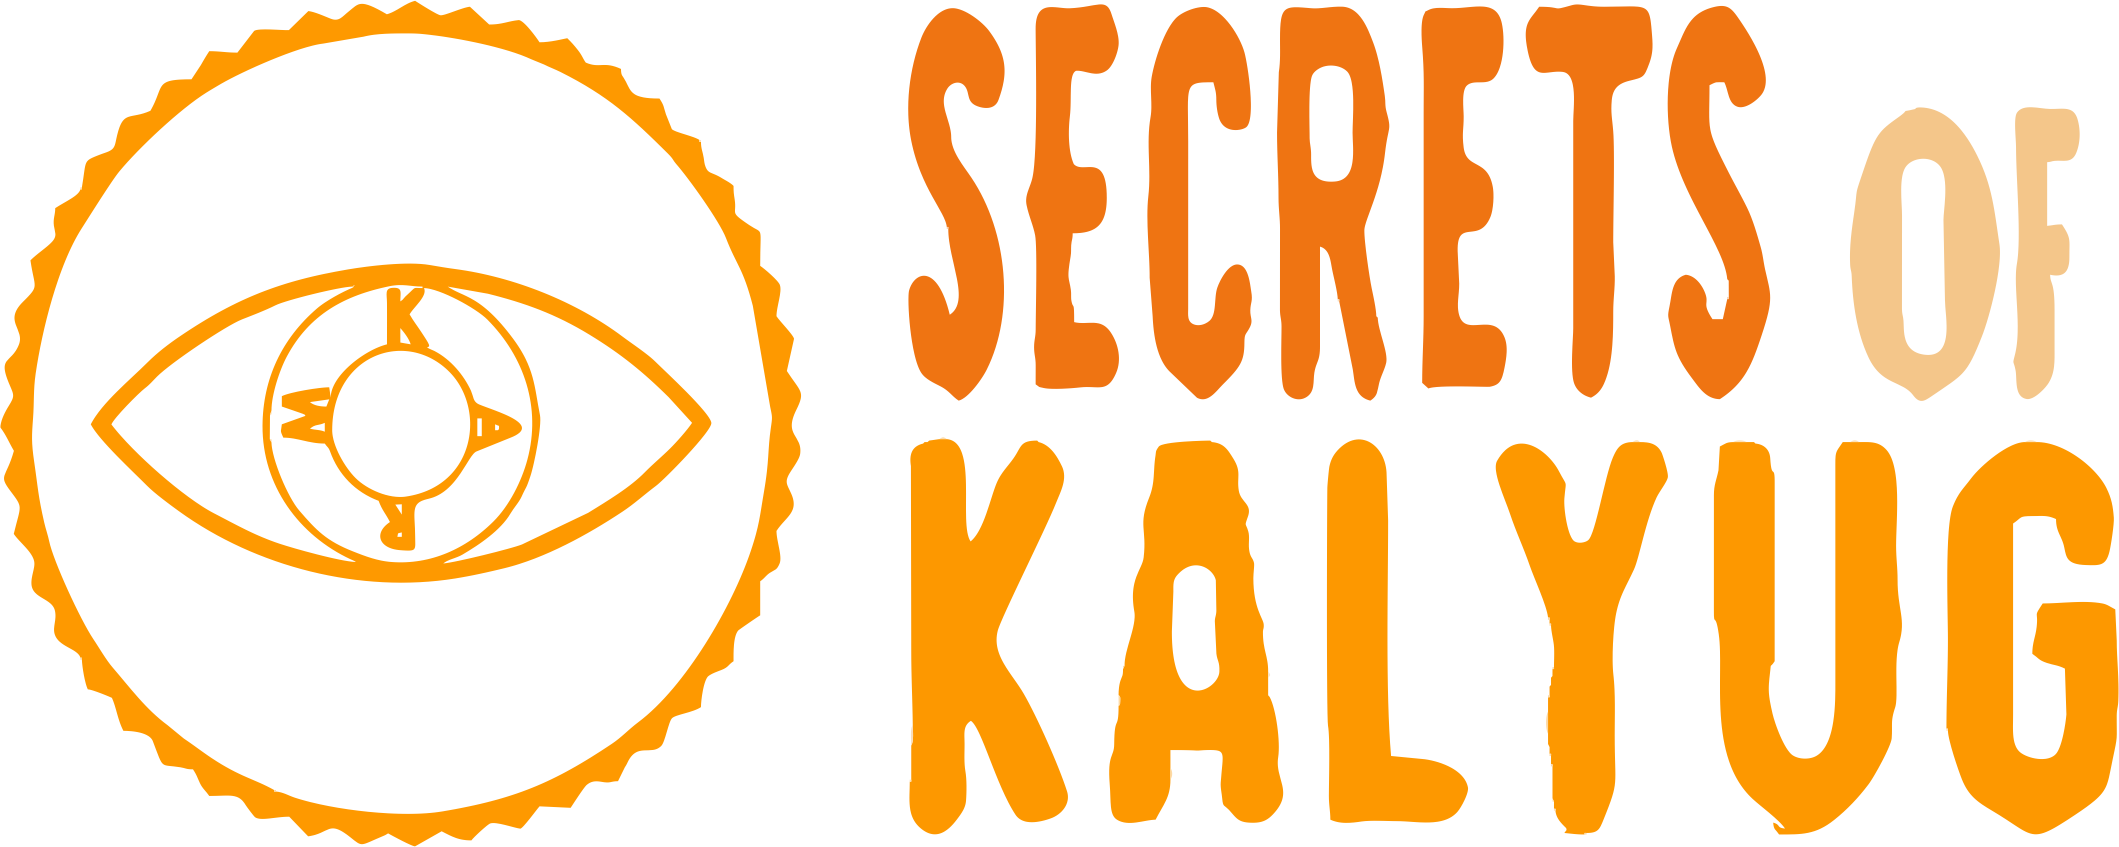 Secrets of Kalyug